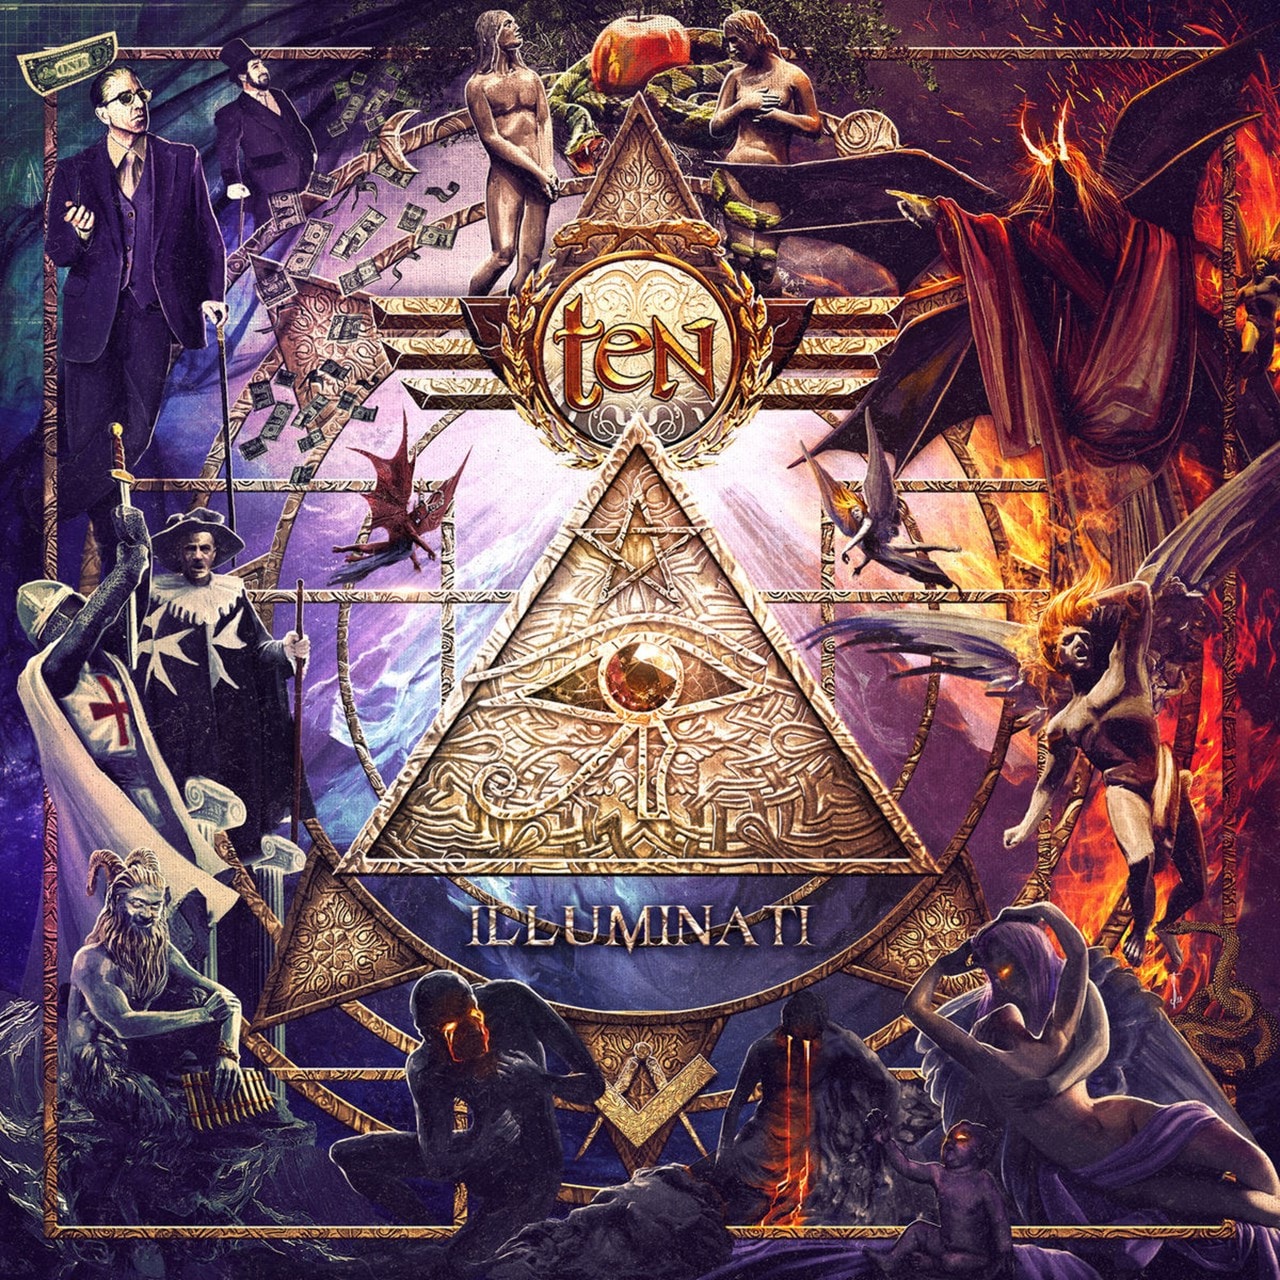 illuminati official website